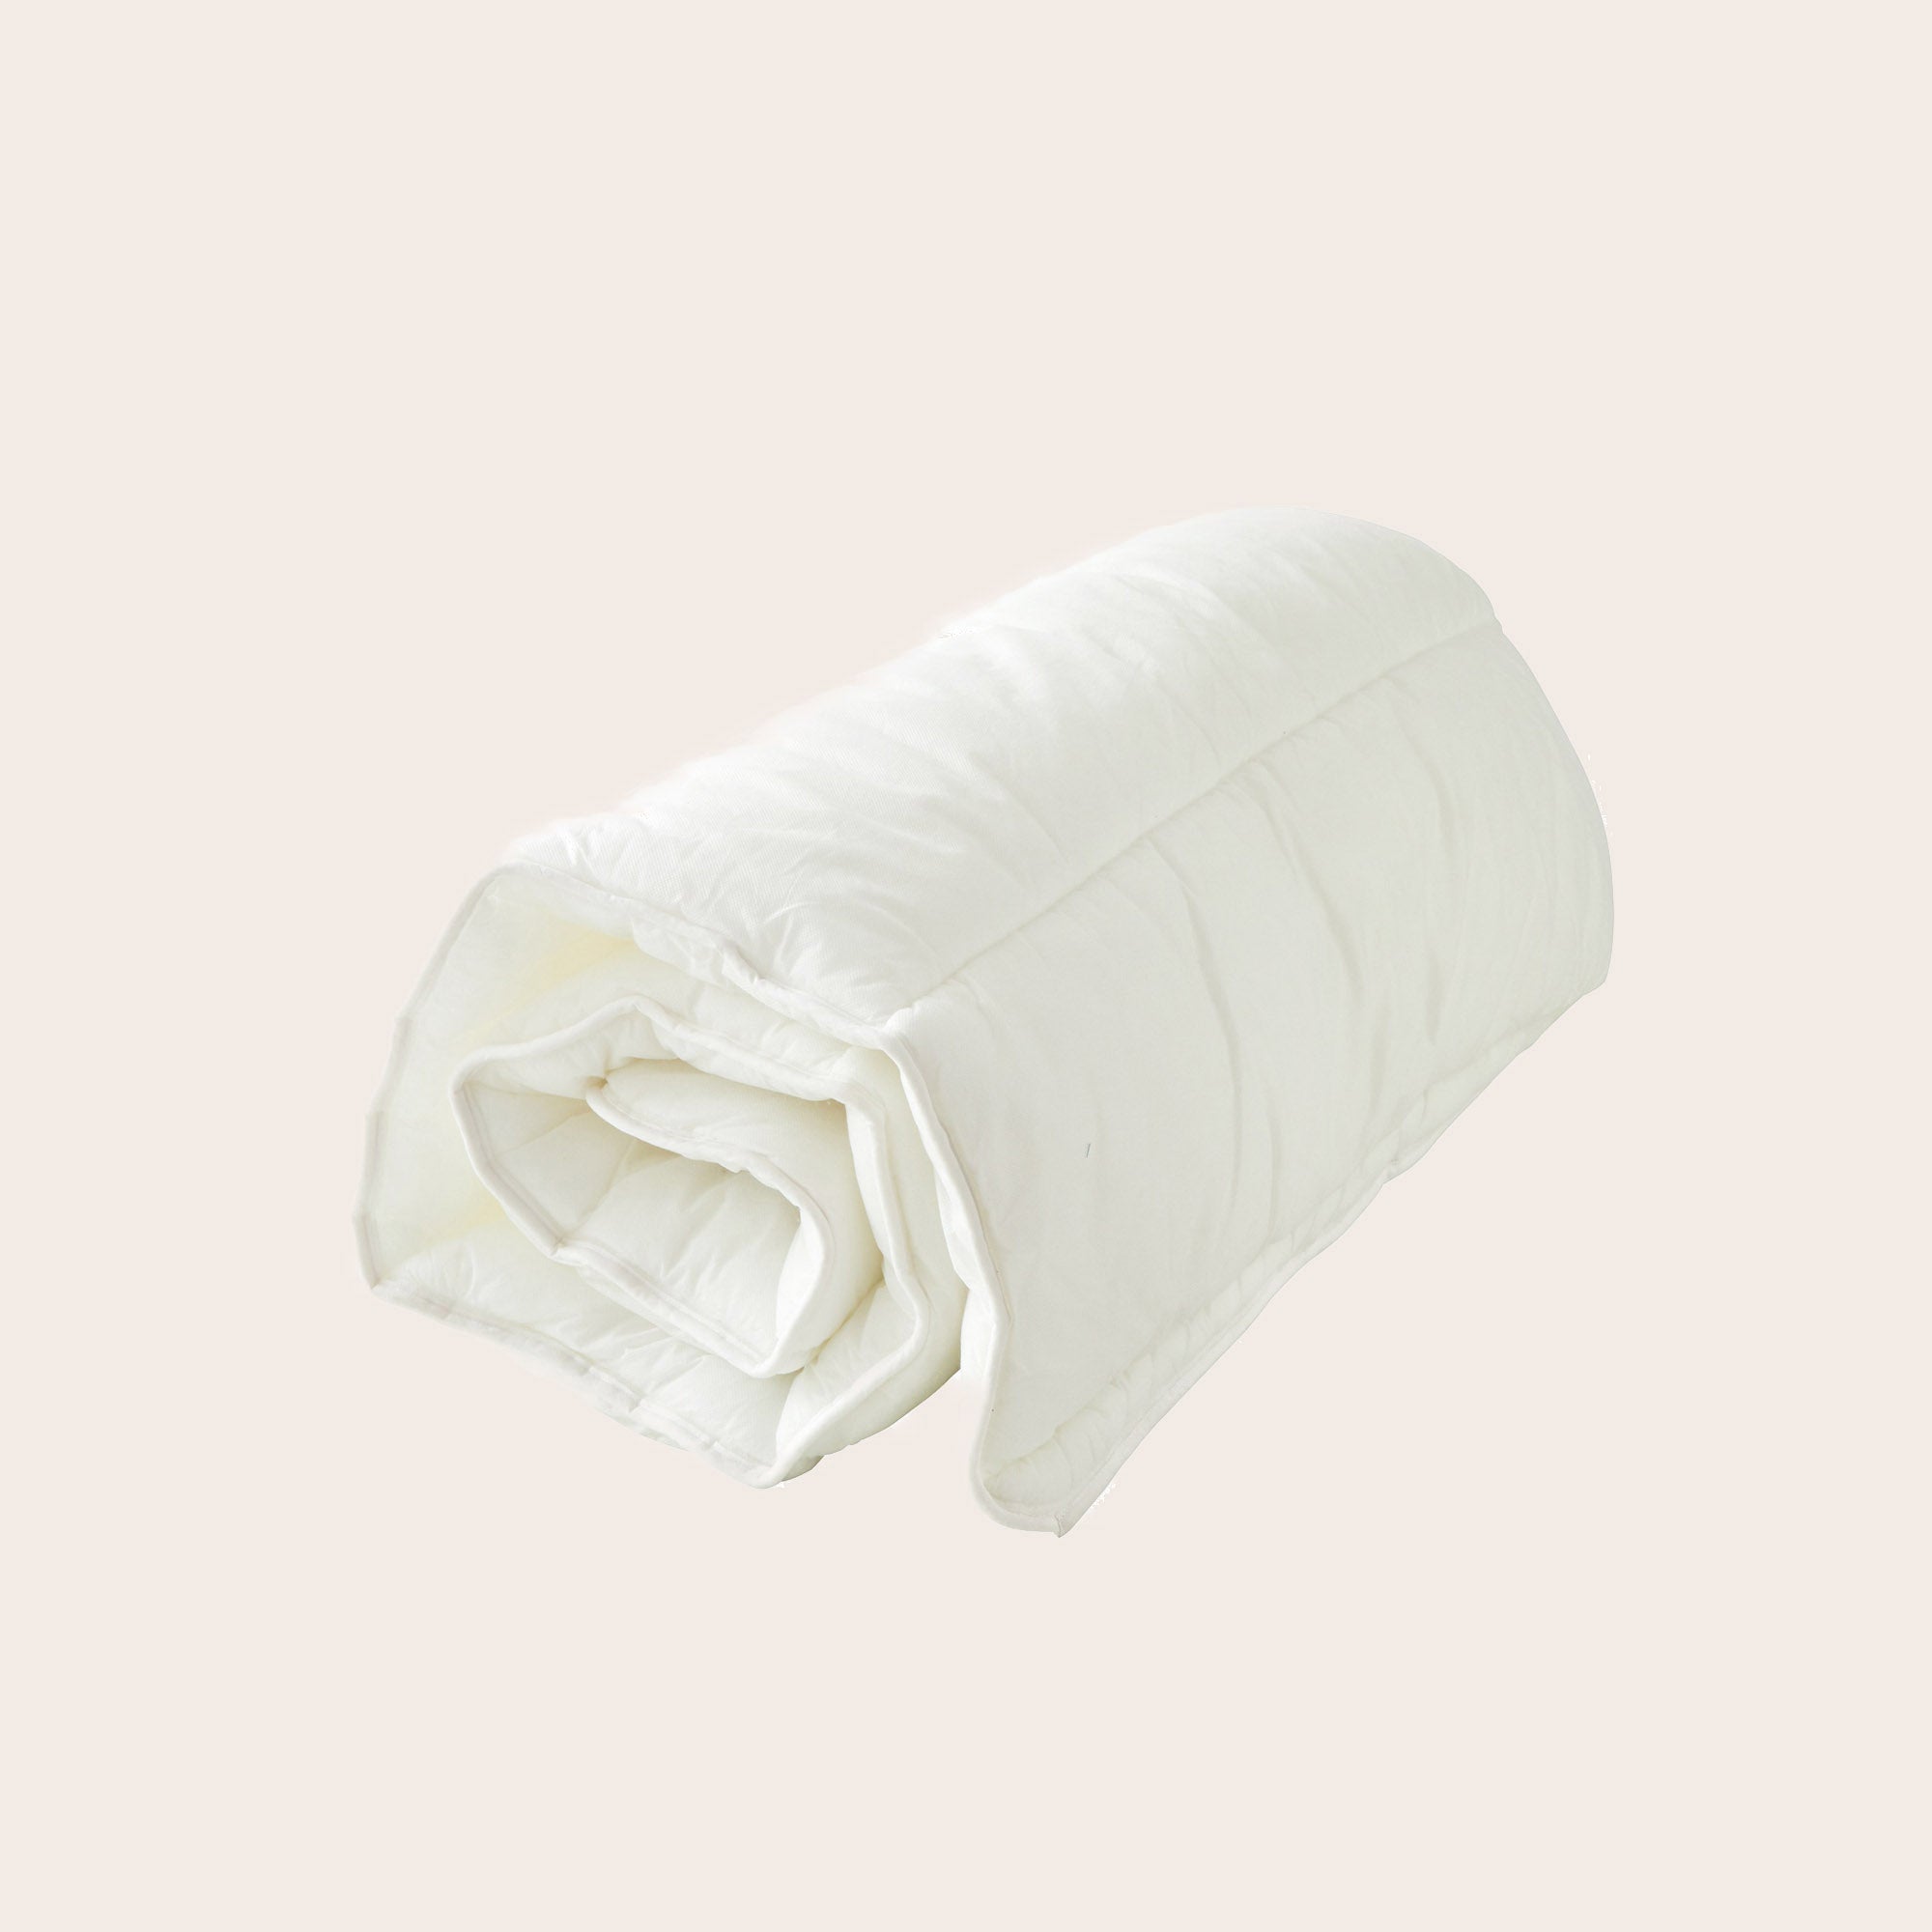 Fibre white quilt pad insert